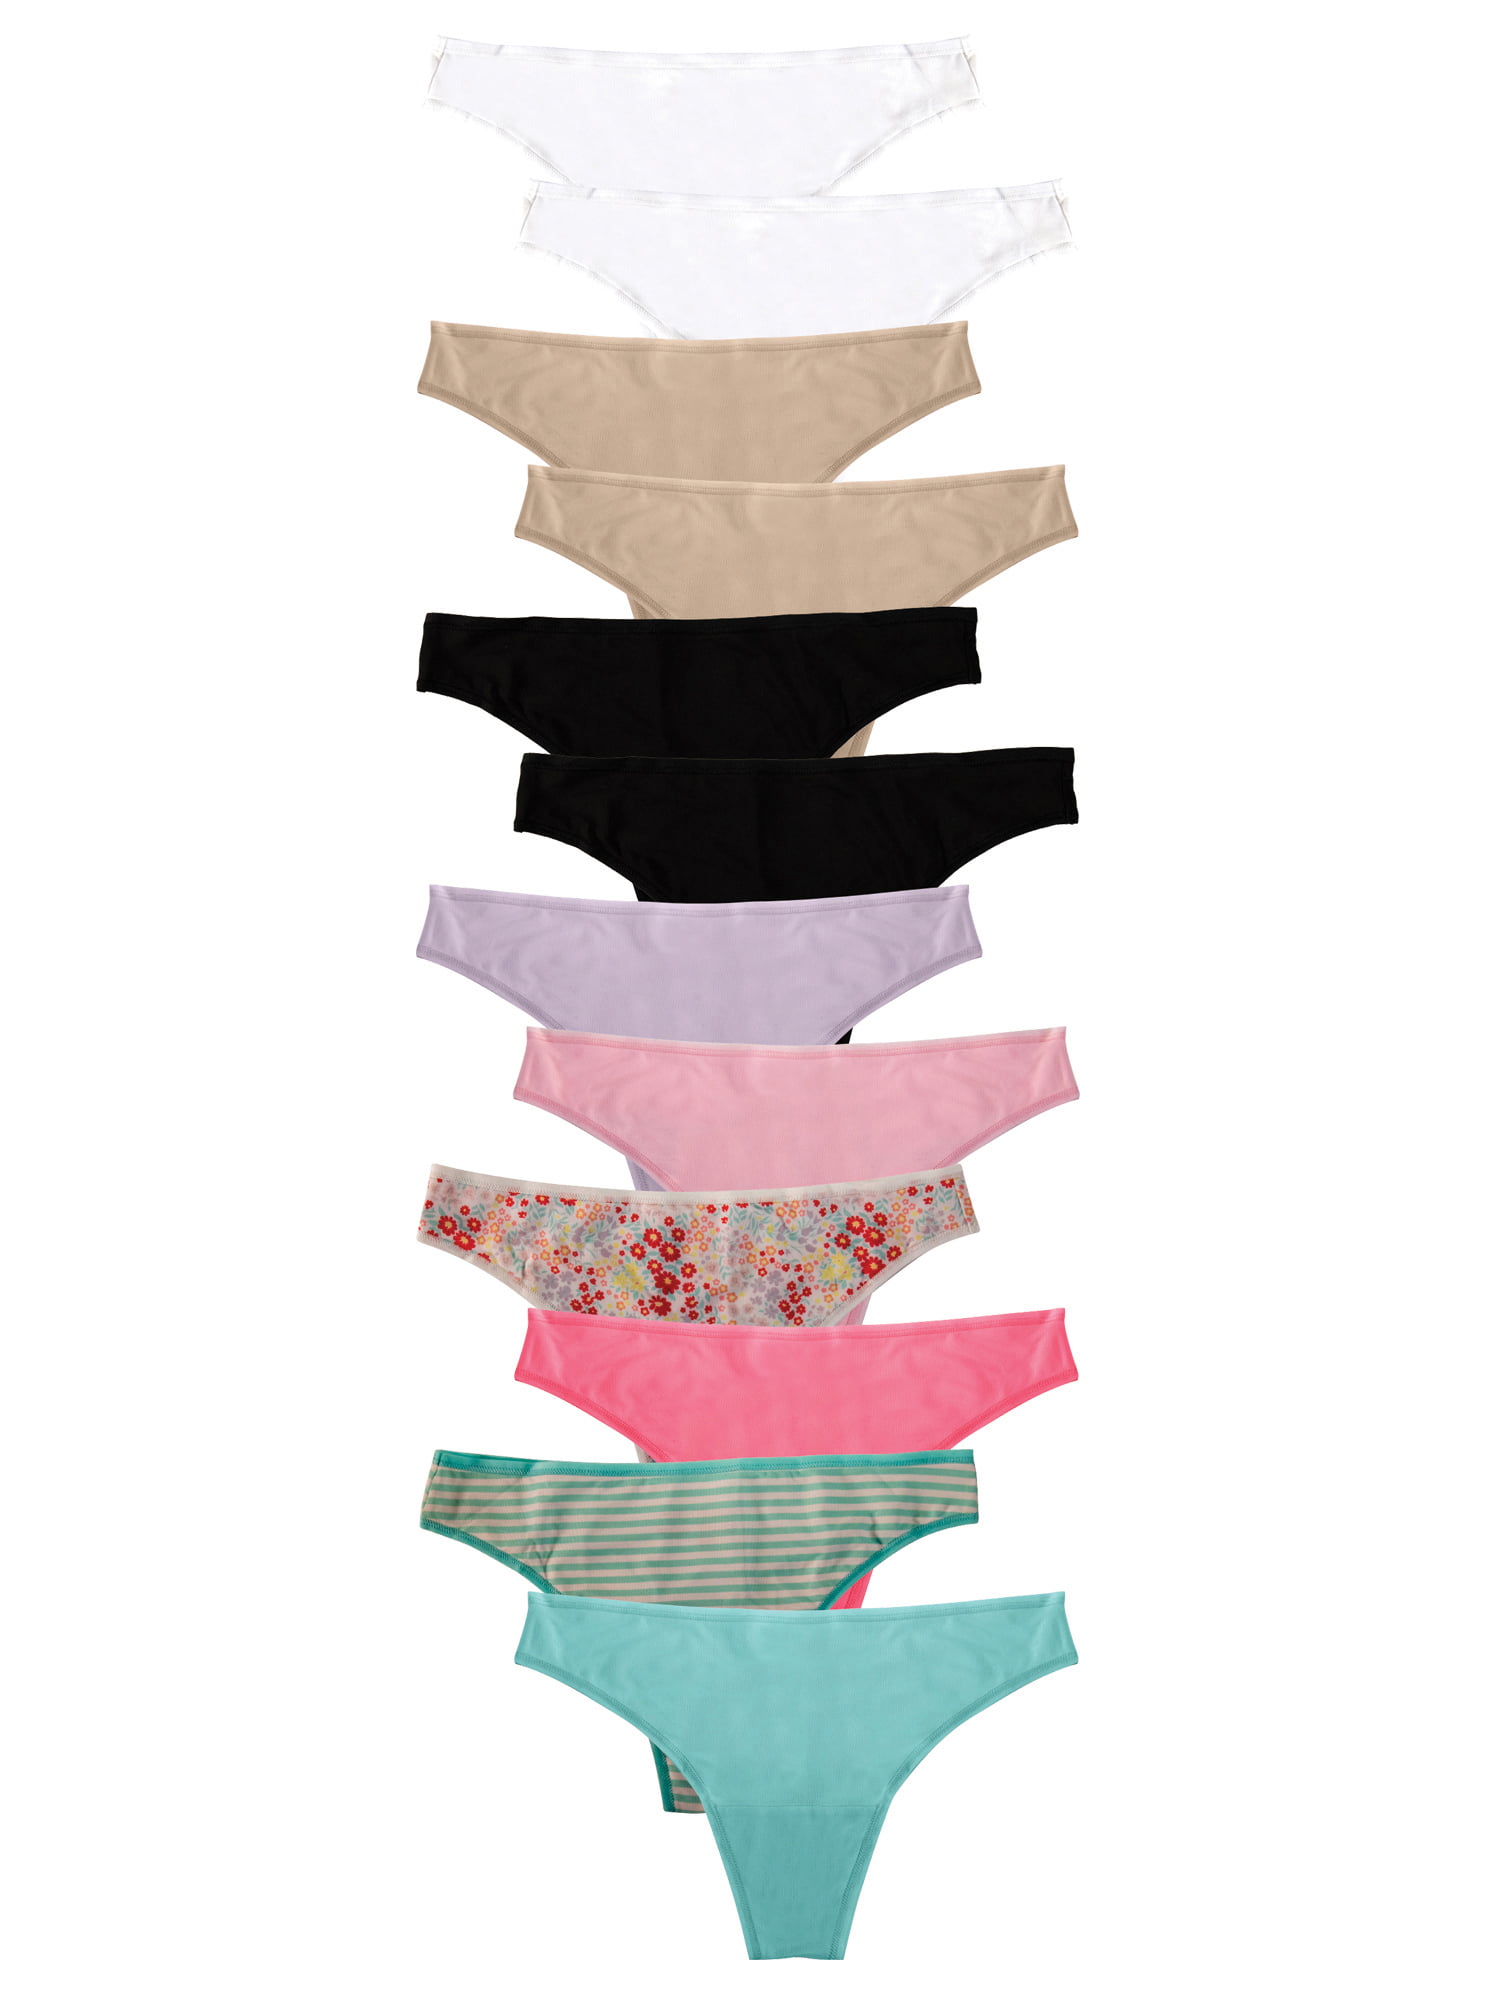 Secret Treasures Thong Silhouette Polyester Spandex Panty (Women's